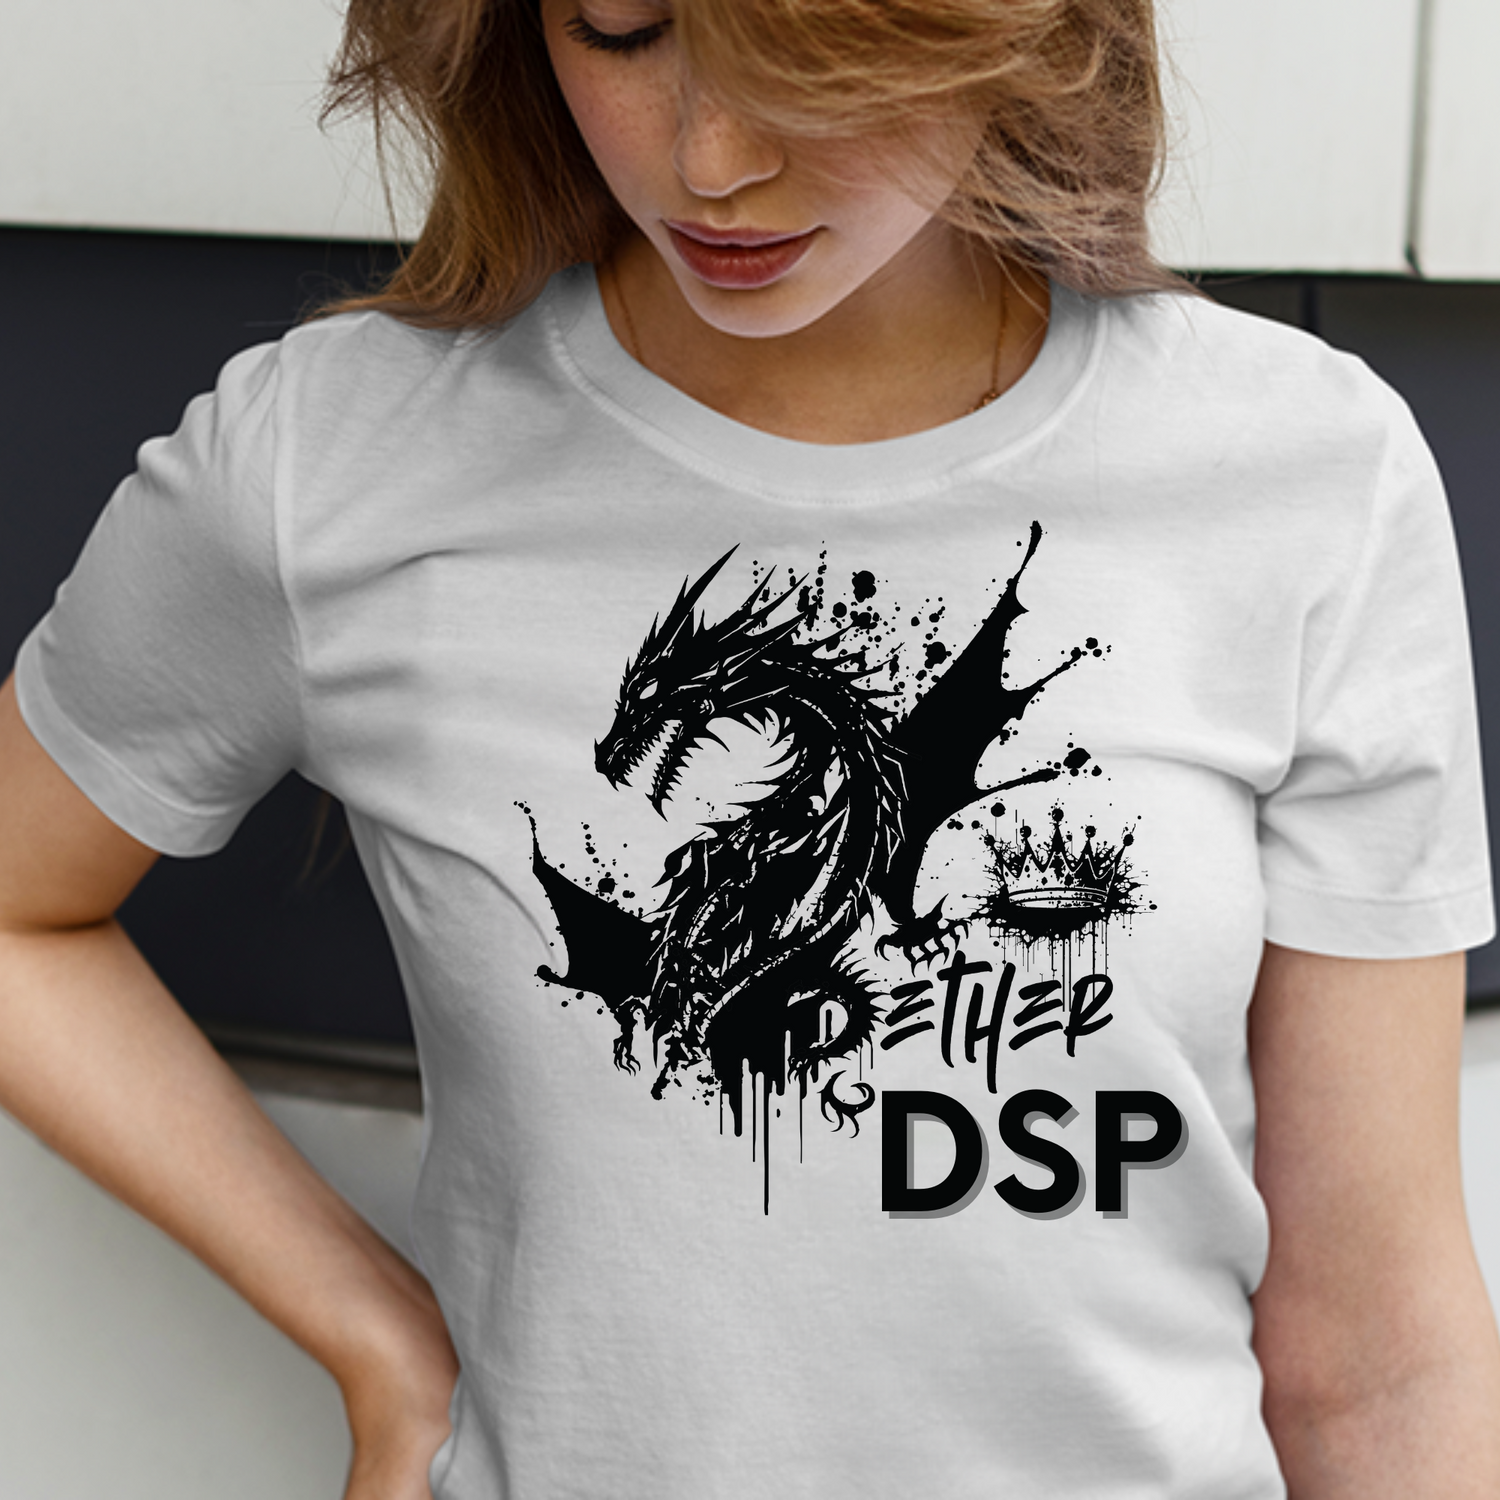 Men's DSP Tshirts